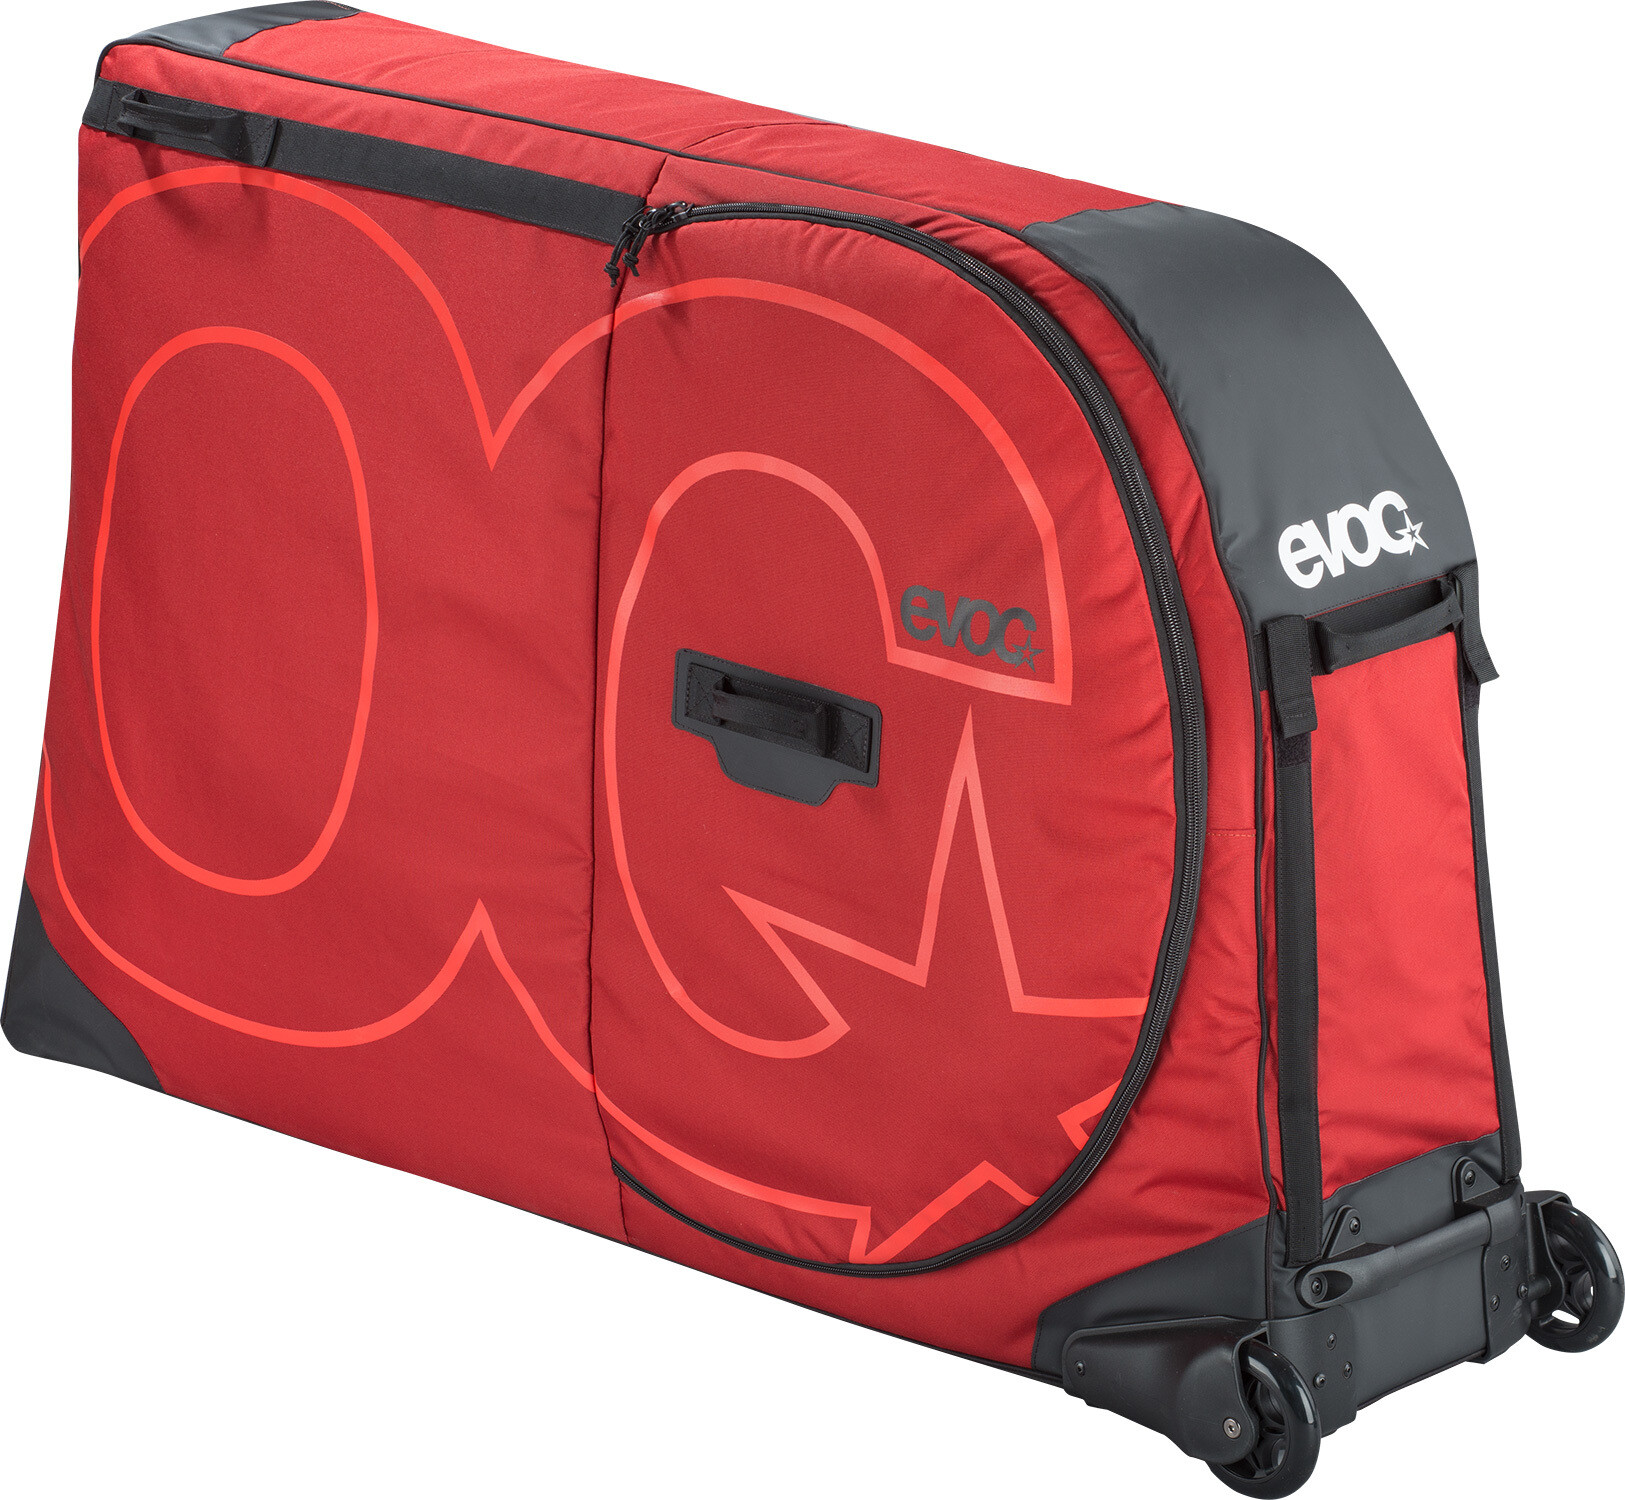 evoc bike travel bag red